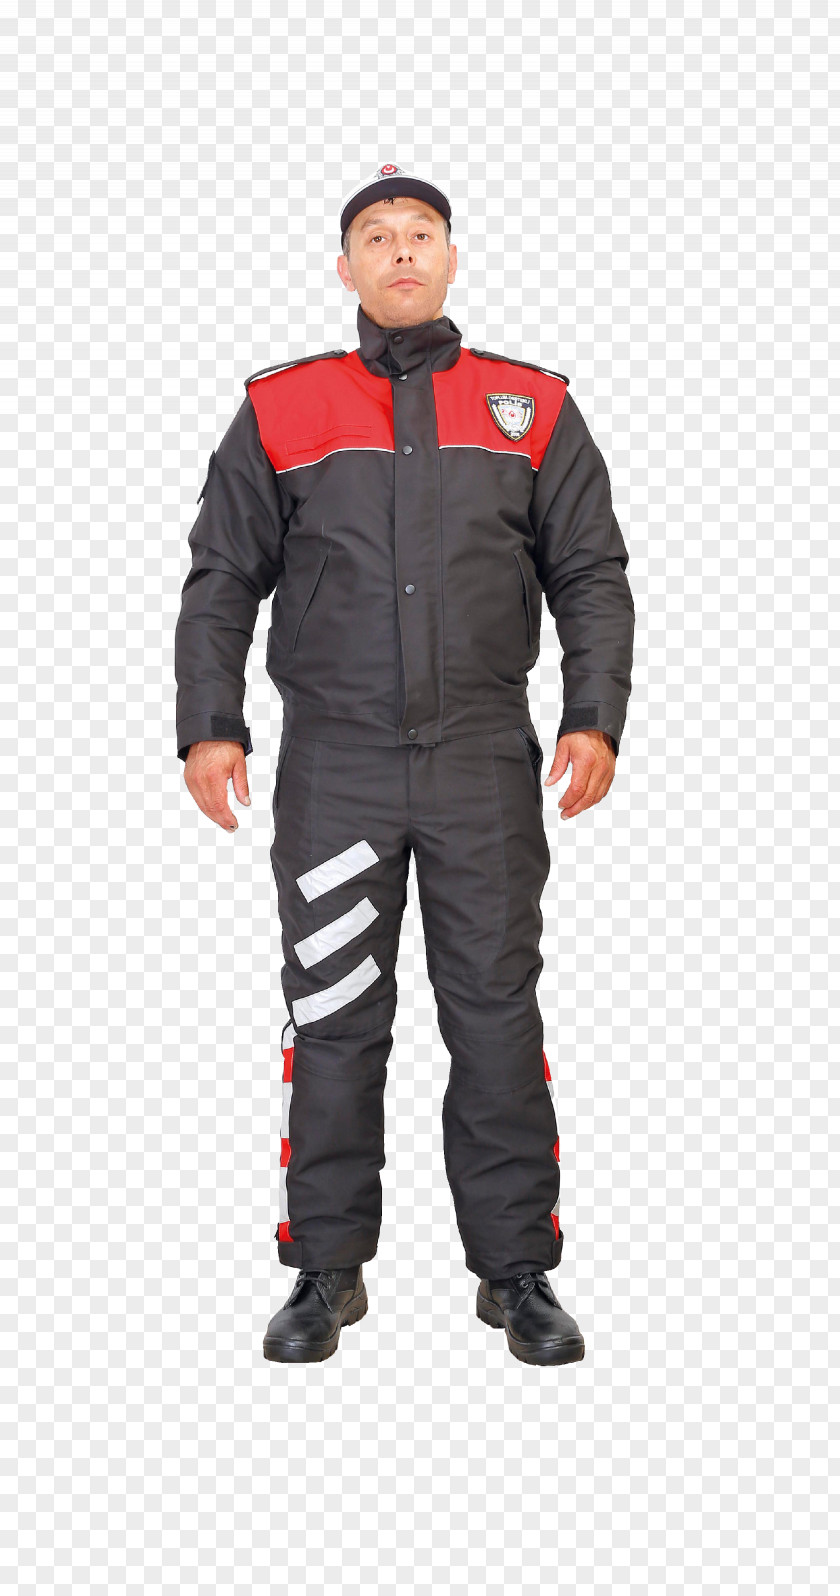 Turkish Jacket Uniform Sleeve Hoodie Outerwear PNG